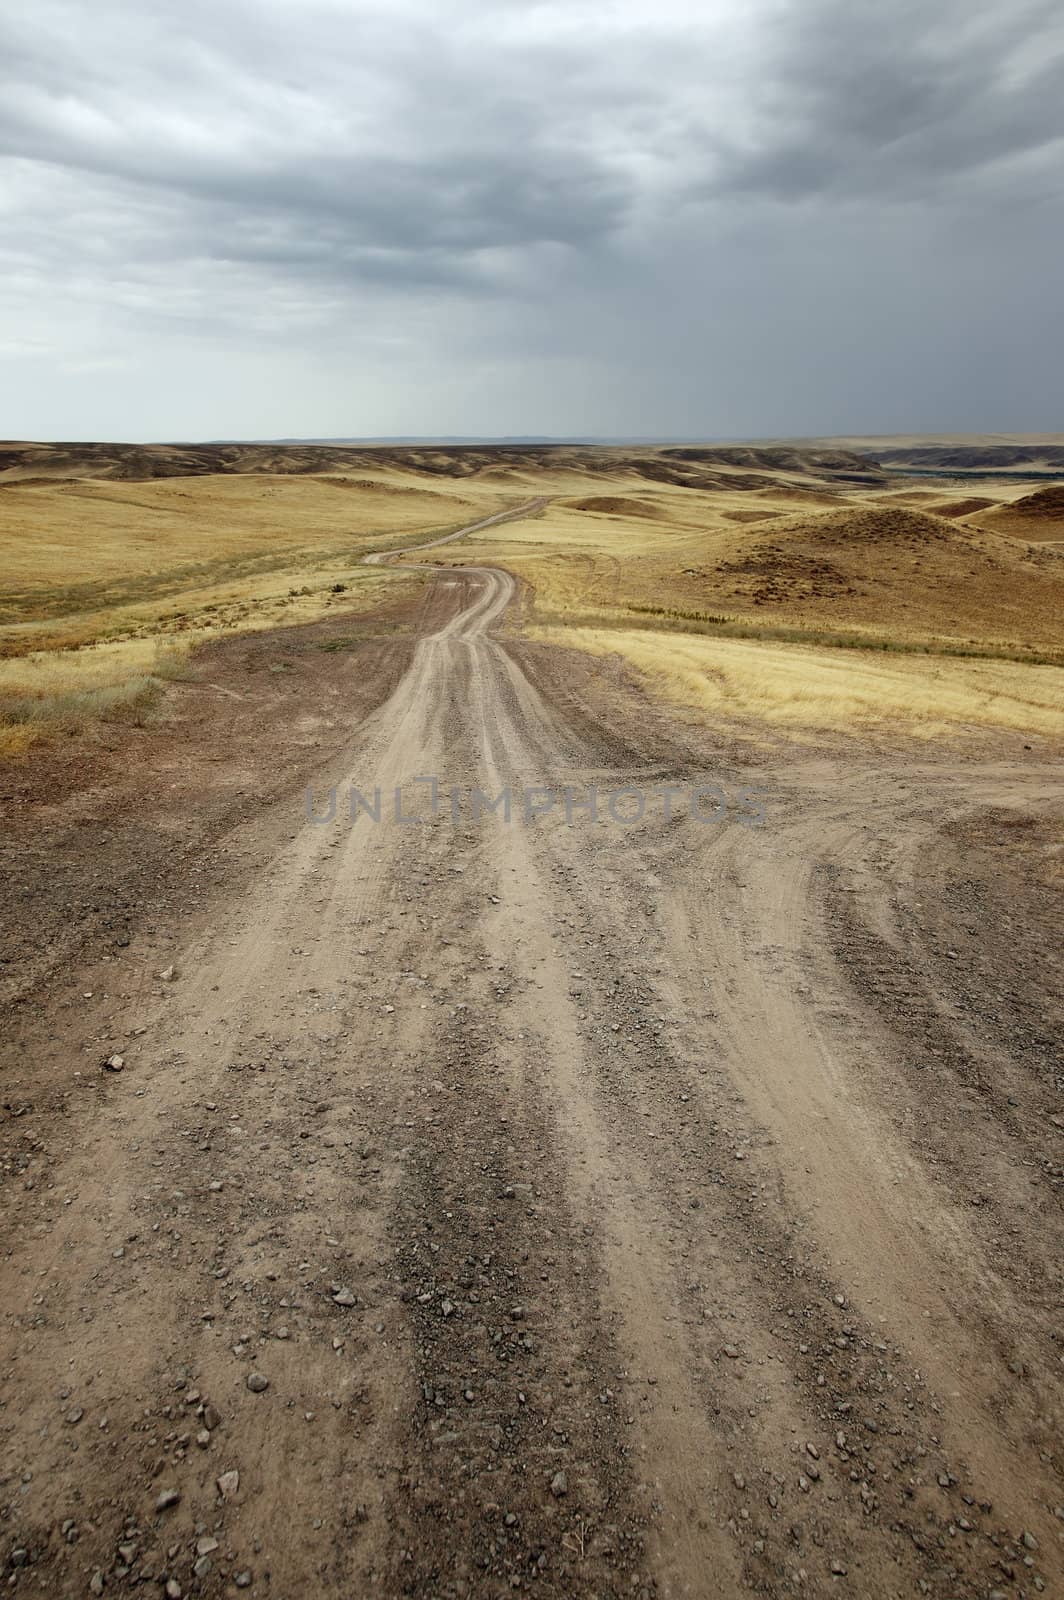 Roads in the desert by Novic